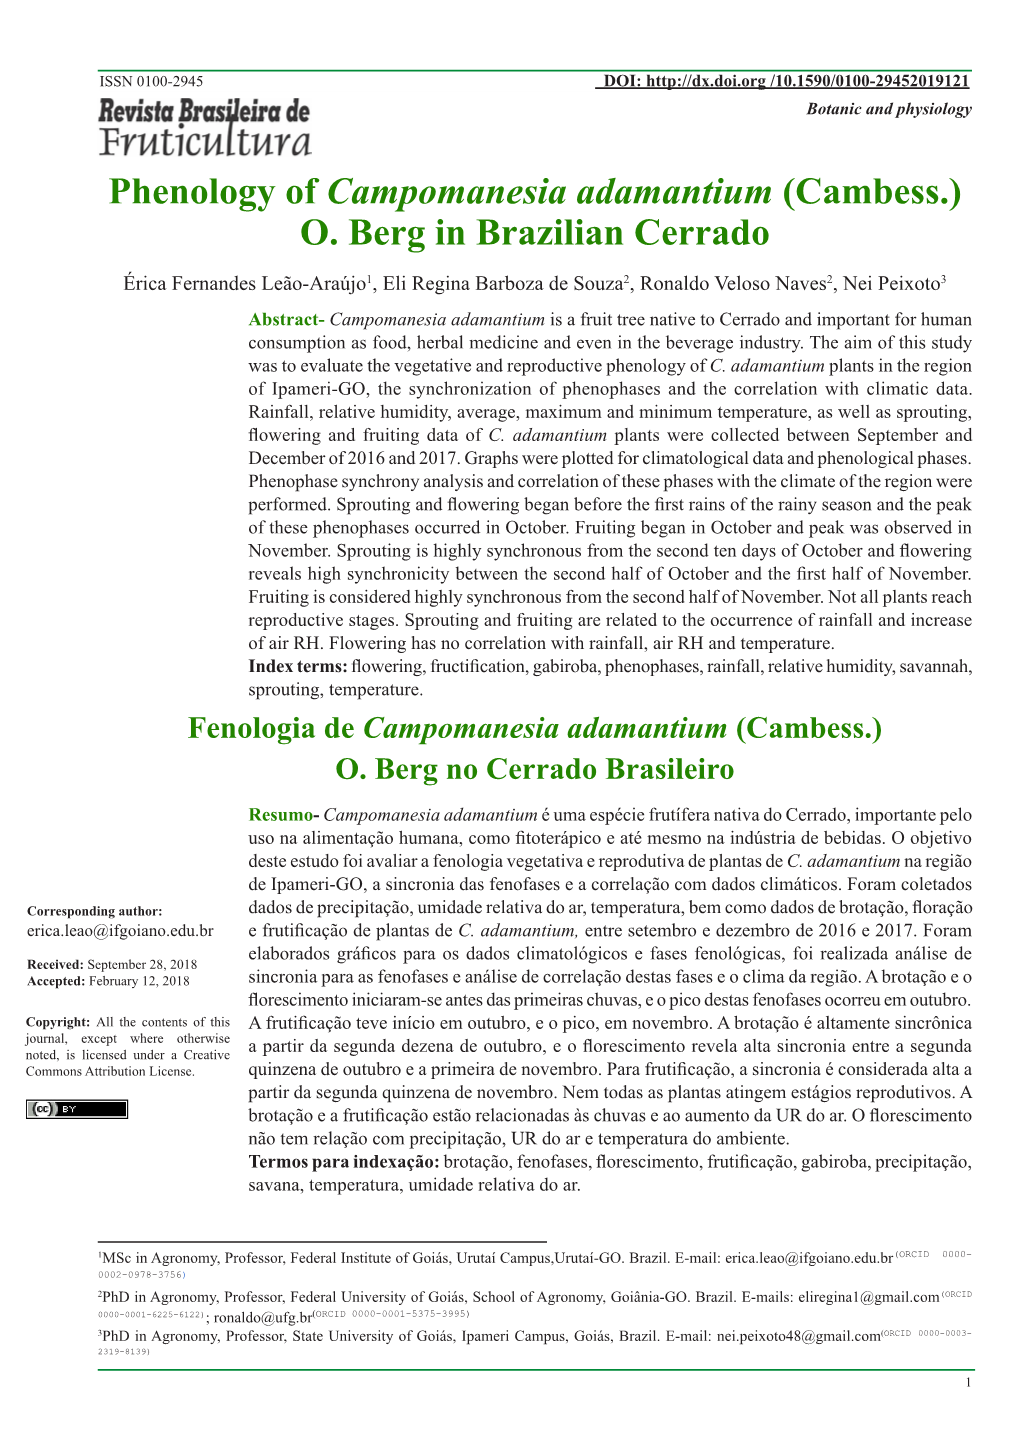 Phenology of Campomanesia Adamantium (Cambess.) O. Berg In